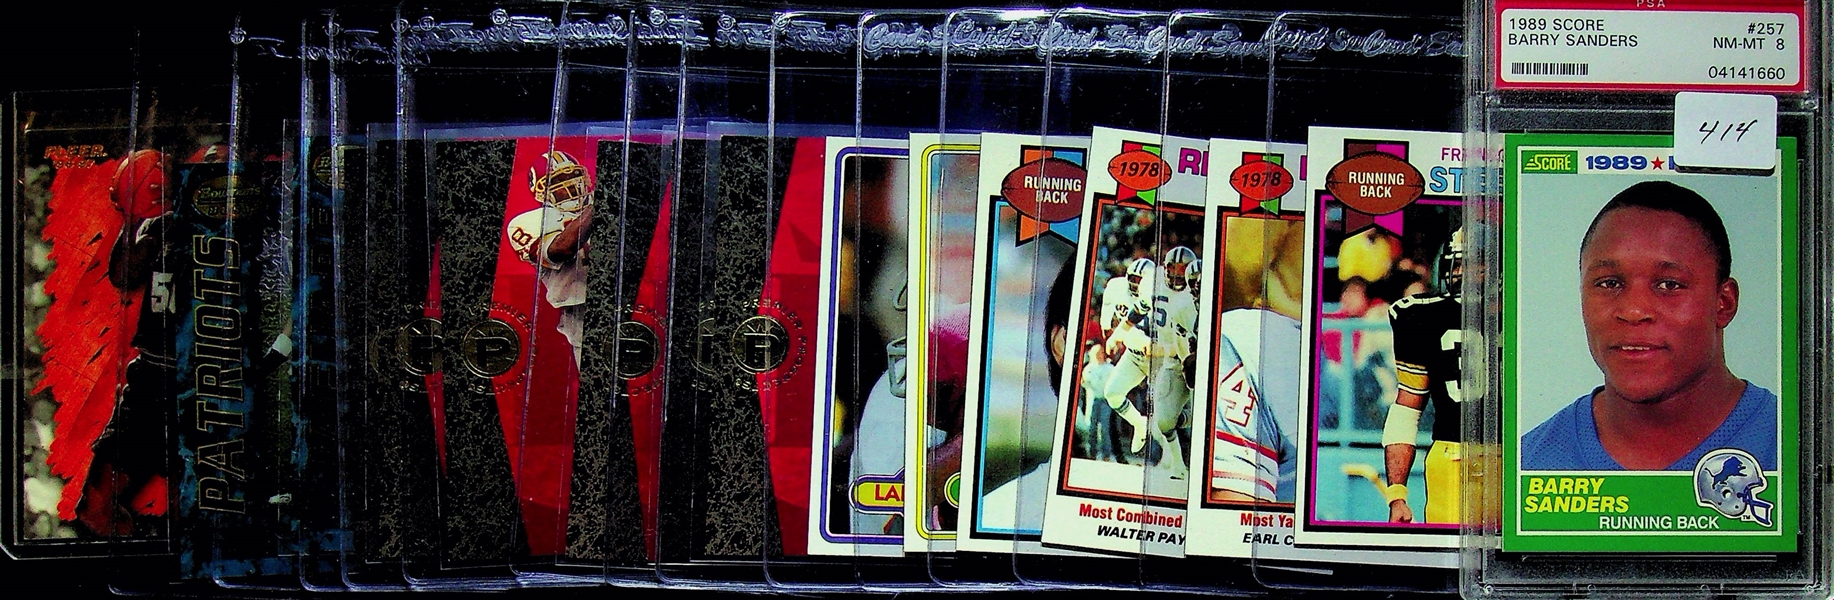 Lot of 16 Football & Basketball Cards w. 1989 Score Barry Sanders Rookie Card PSA 8